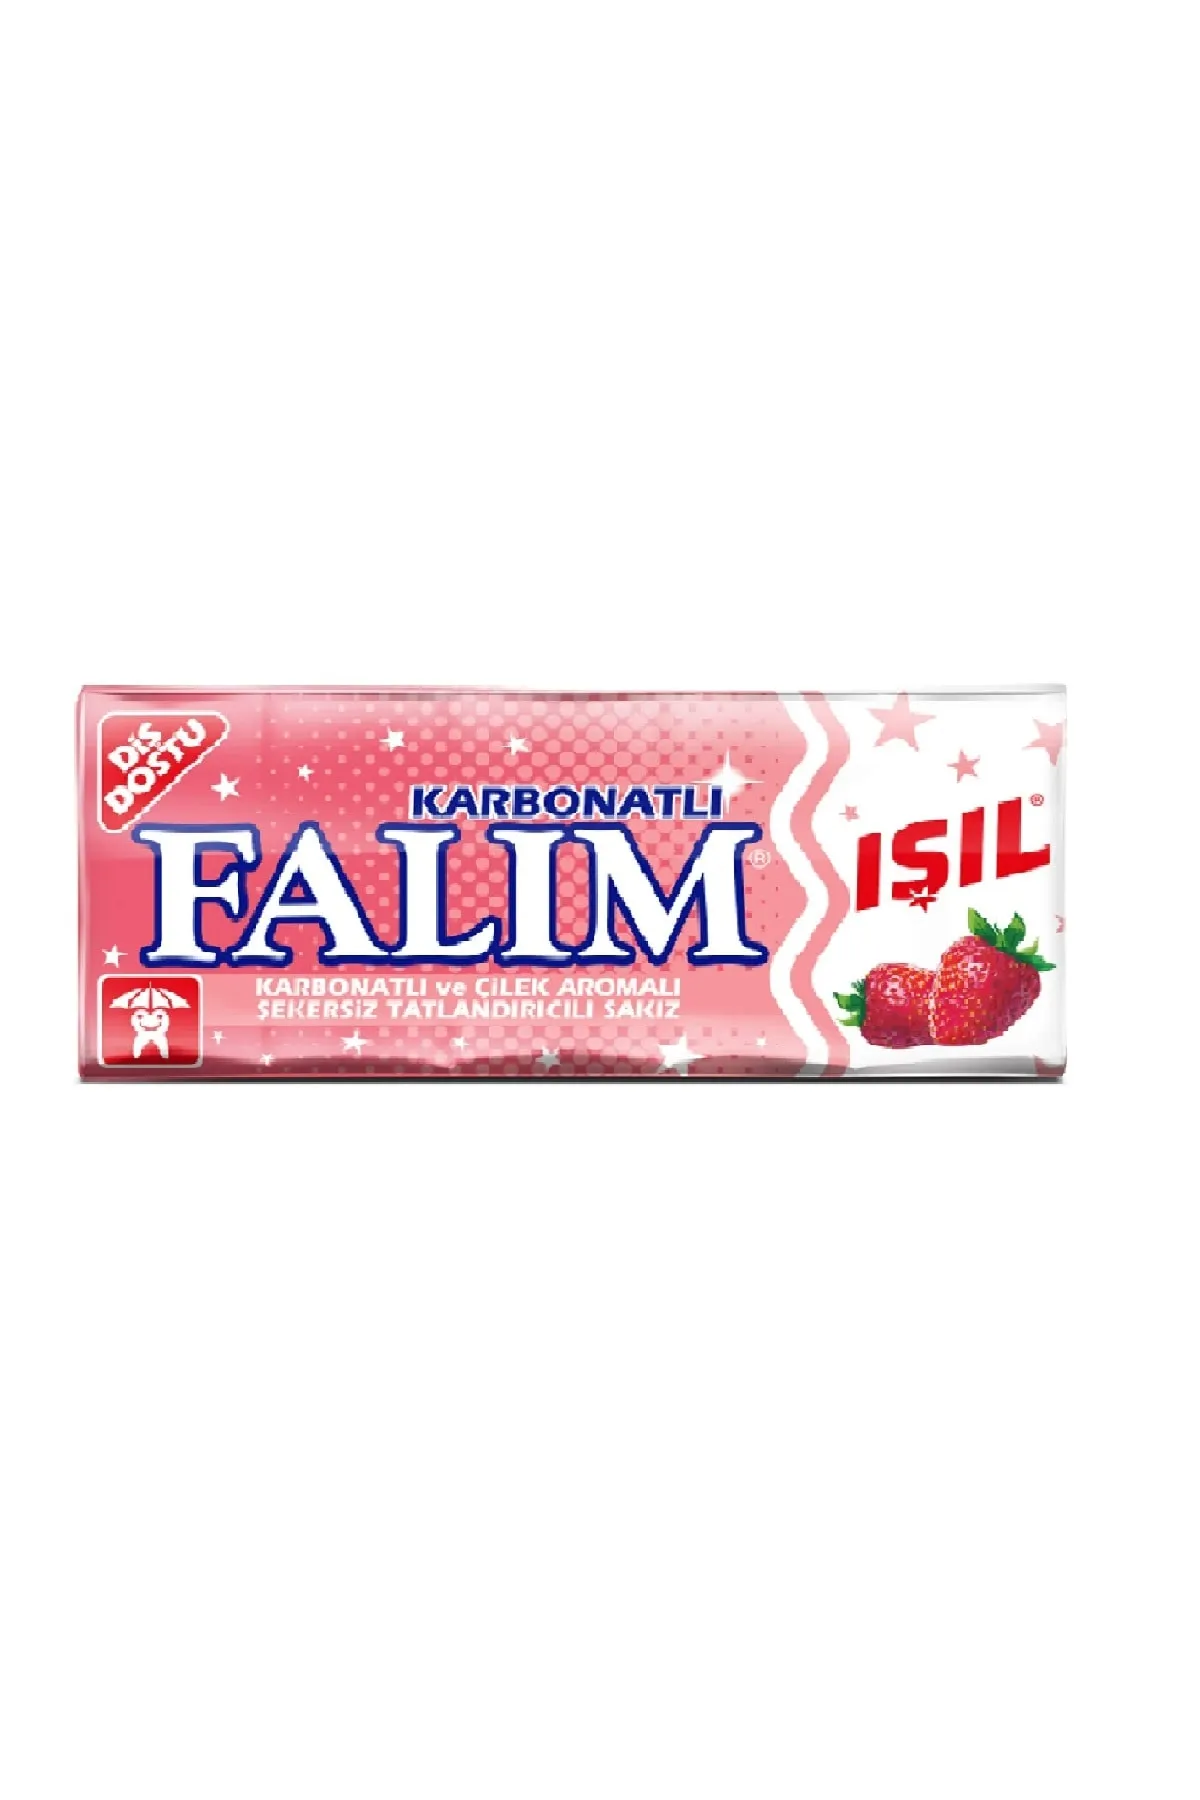 Falim Clove Gum (100 pcs) - DF456